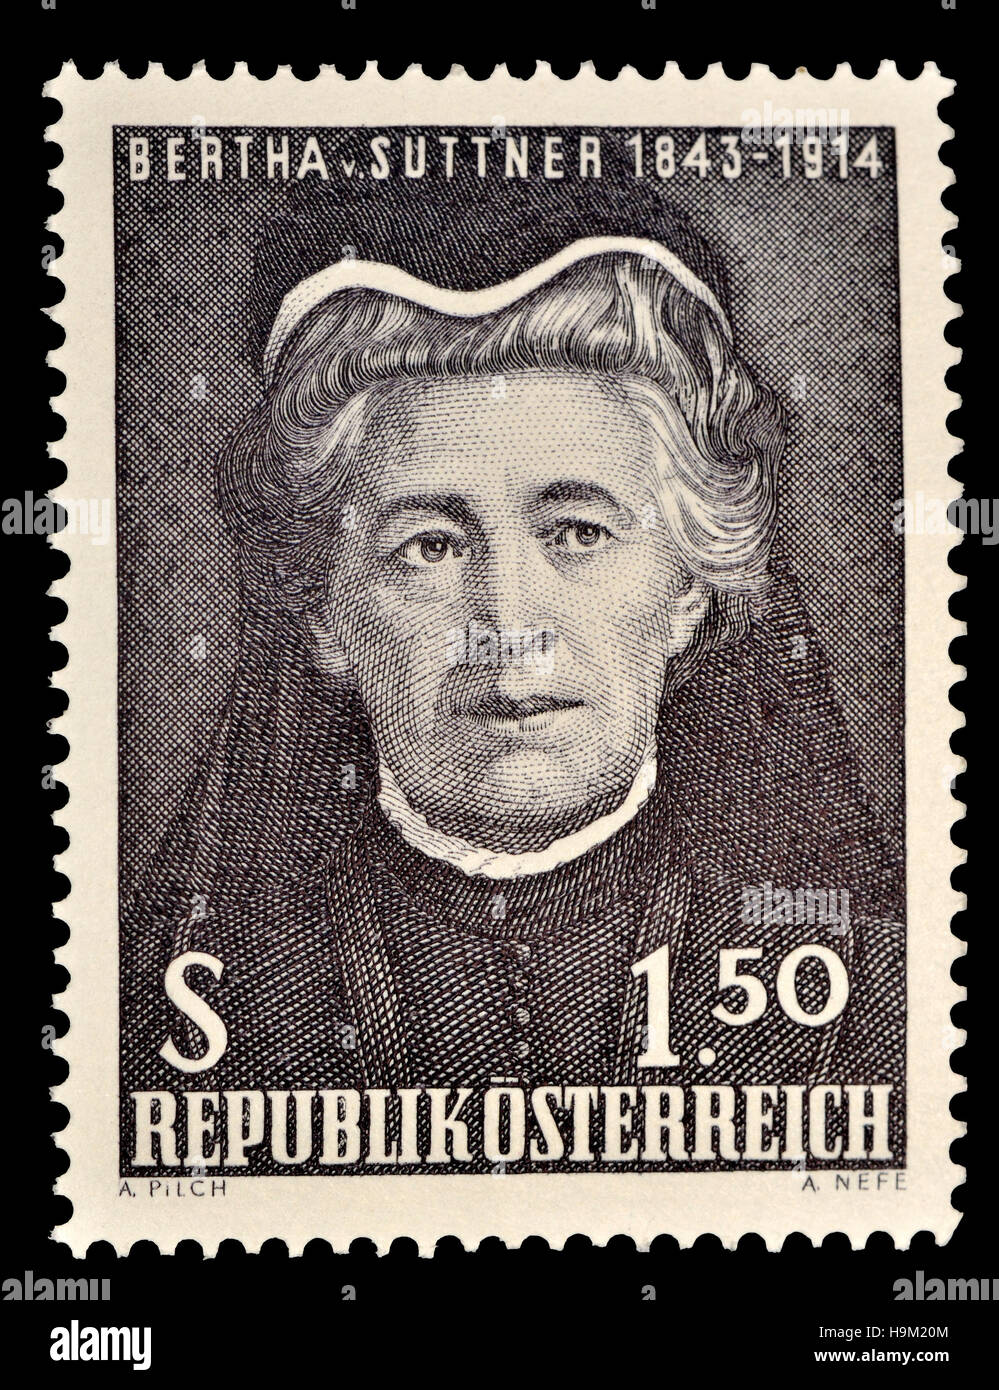 Sello austriaco (1965) : Sophie Felicitas Freifrau Bertha von Suttner (1843-1914) Checo / Austria novelista y pacifista. Foto de stock